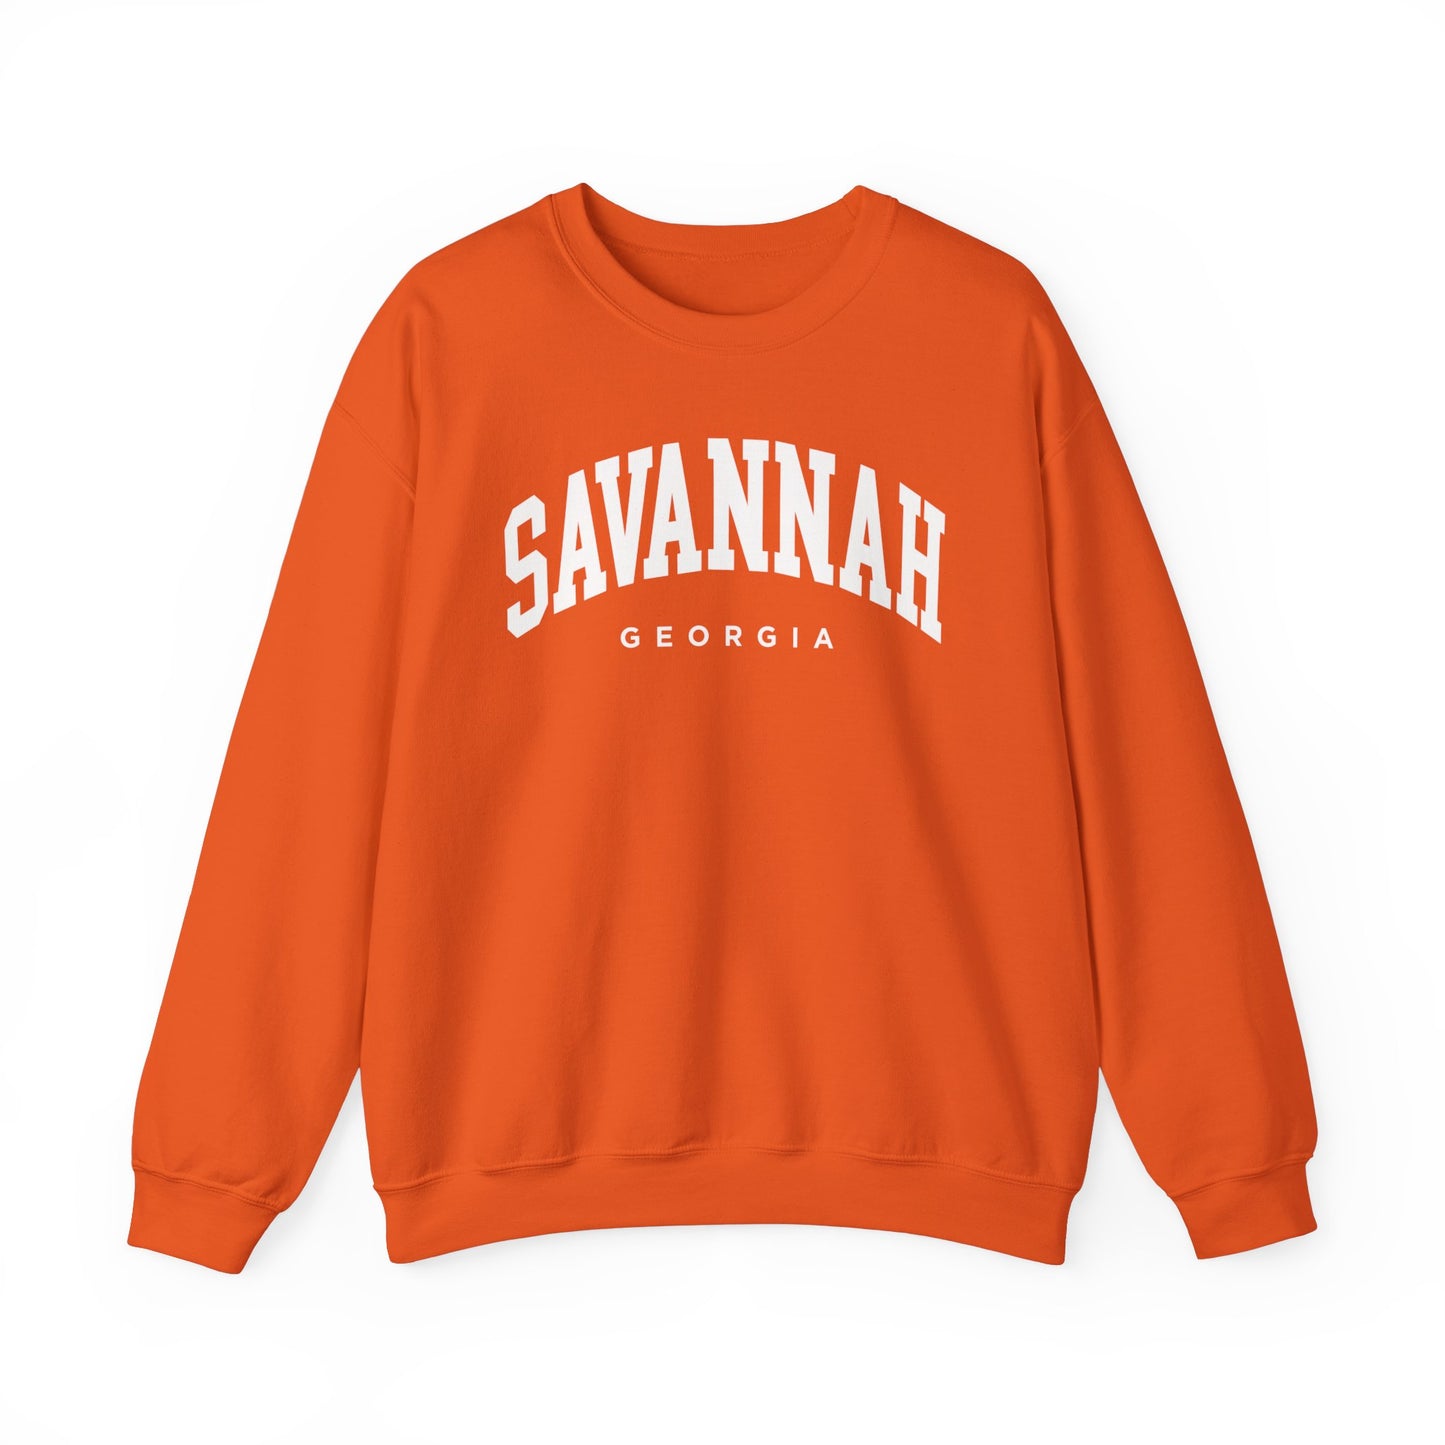 Savannah Georgia Sweatshirt